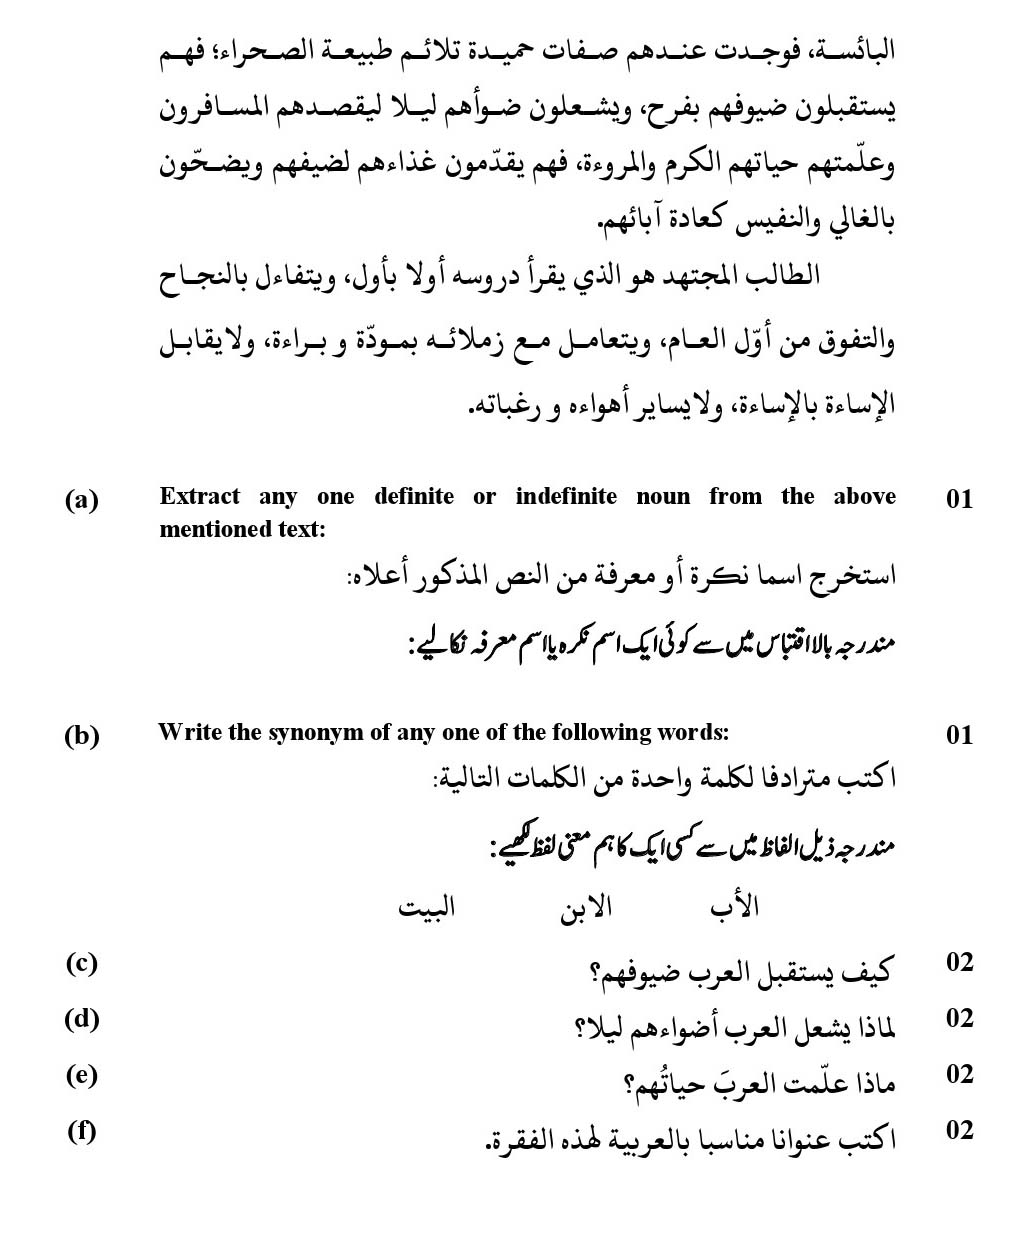 Arabic CBSE Class X Sample Question Paper 2018-19 - Image 2